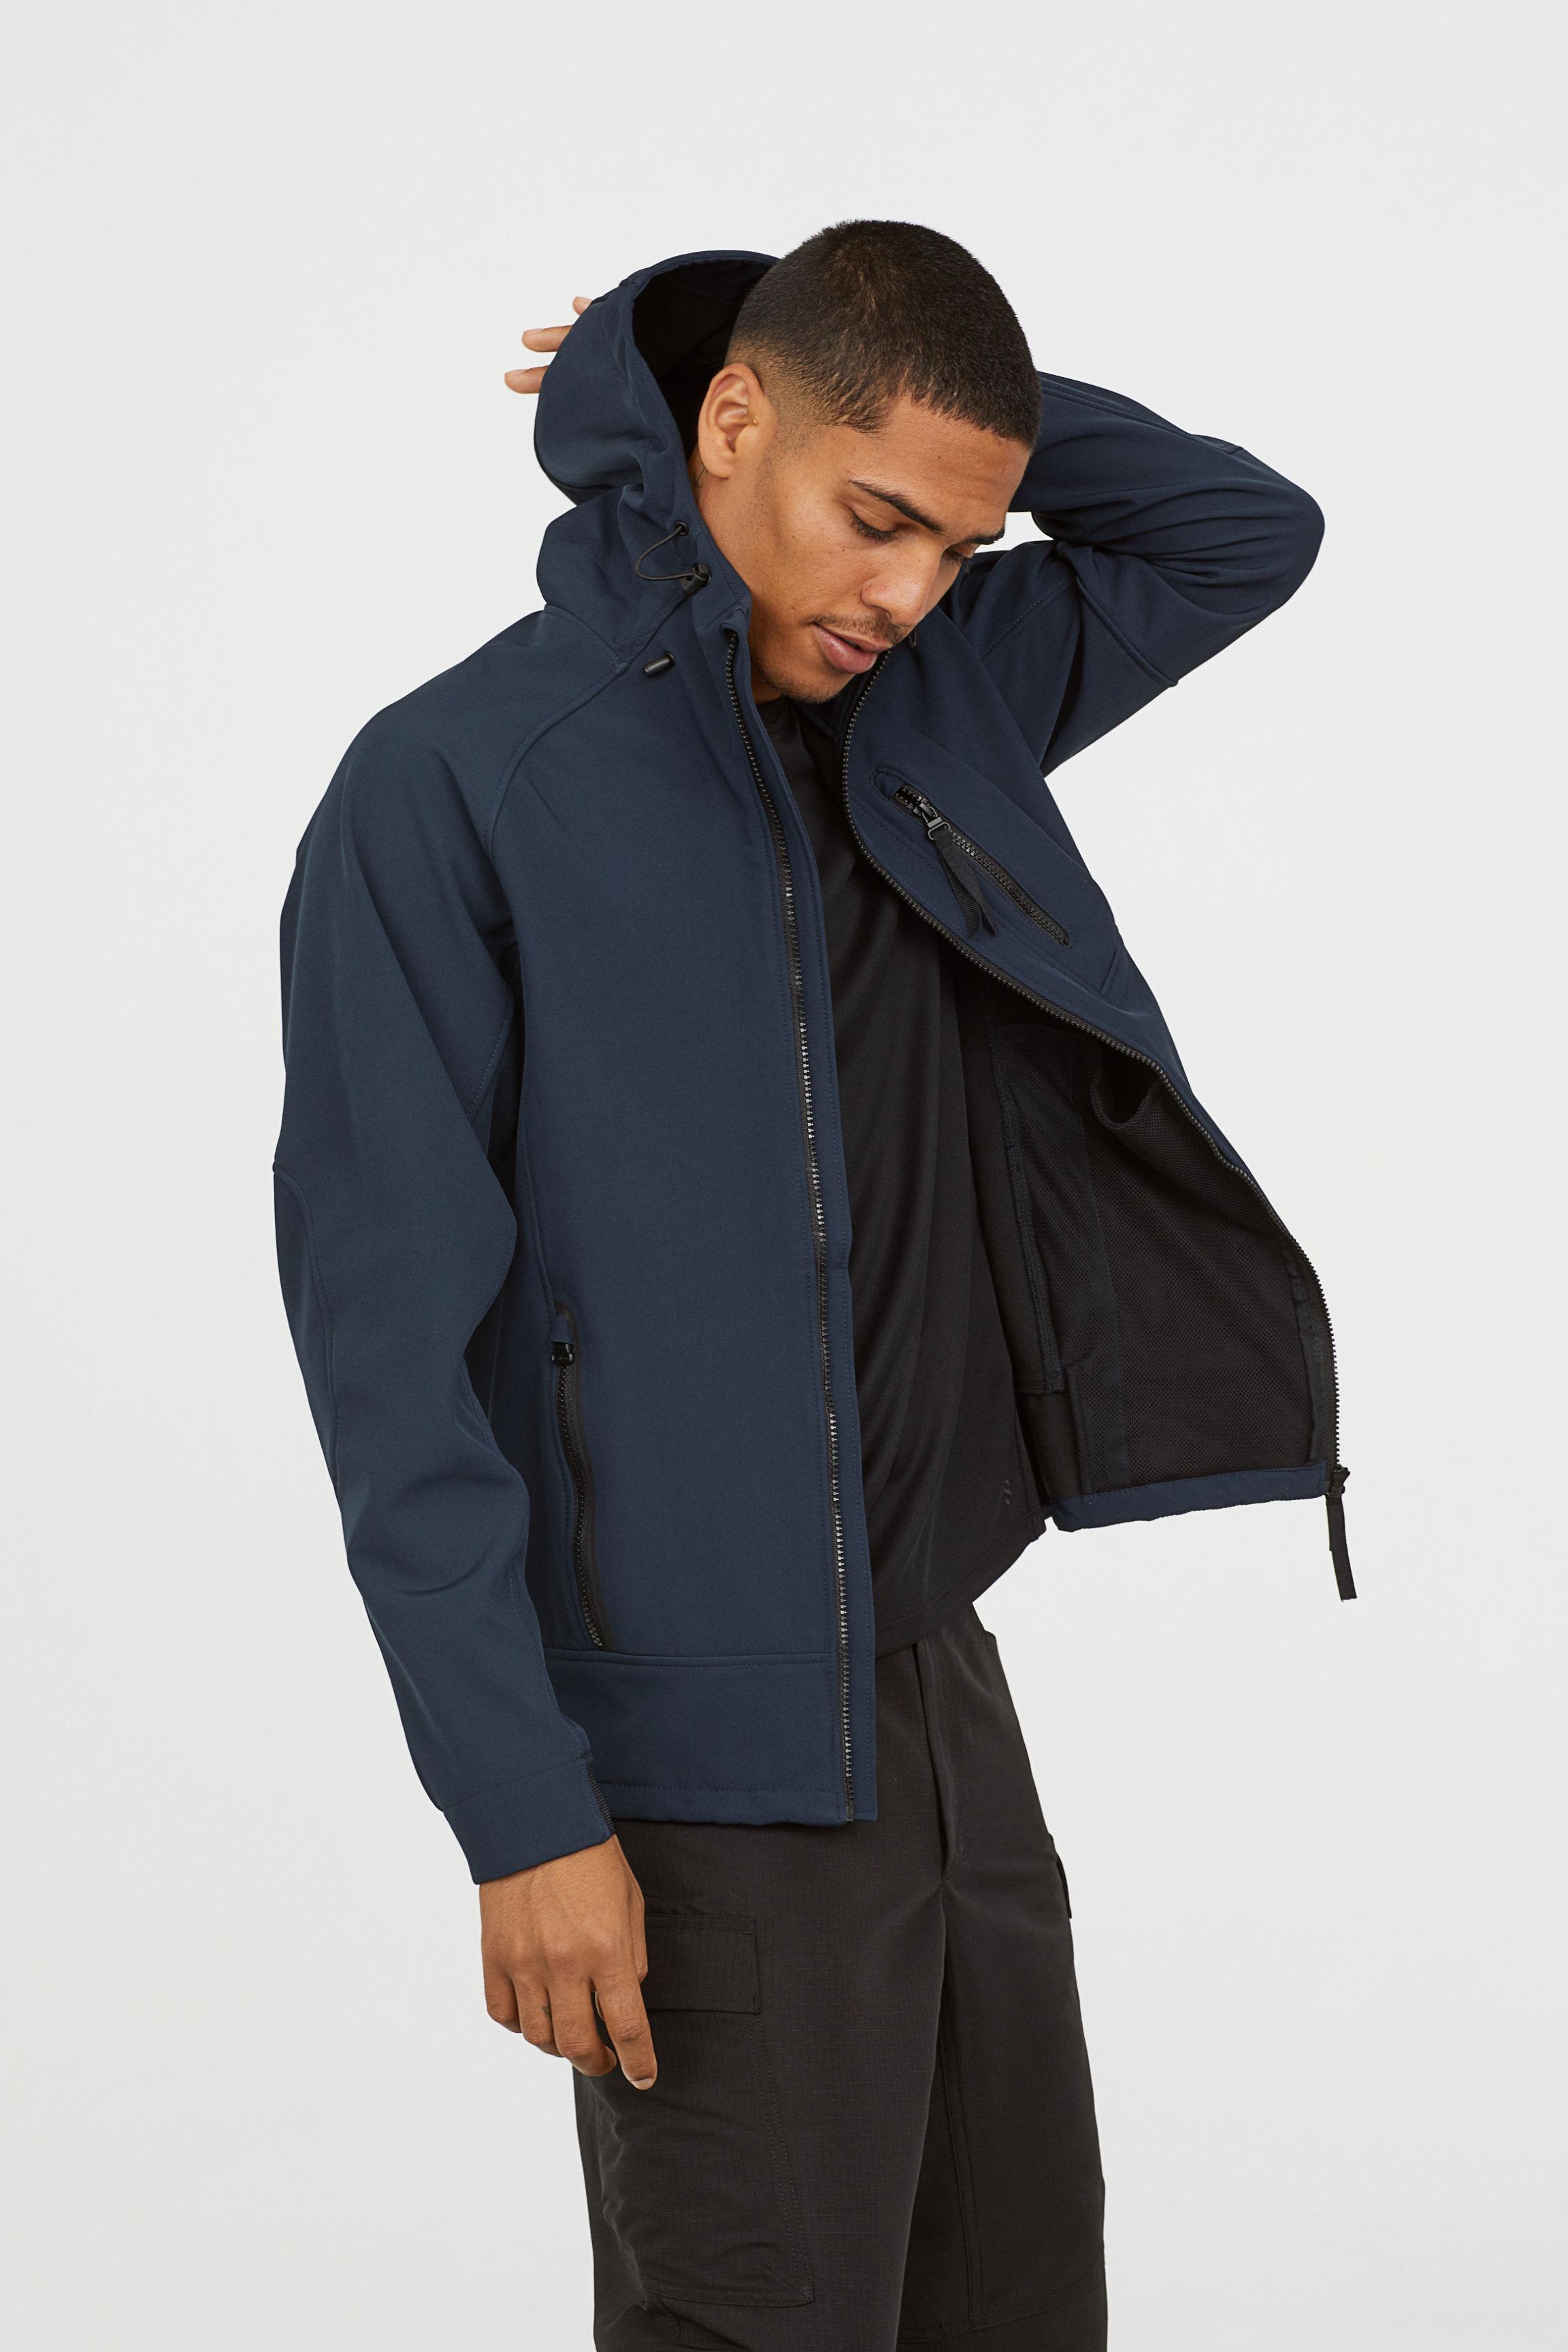 H&M Fleece Softshell Jacket in Dark Blue (Blue) for Men - Lyst